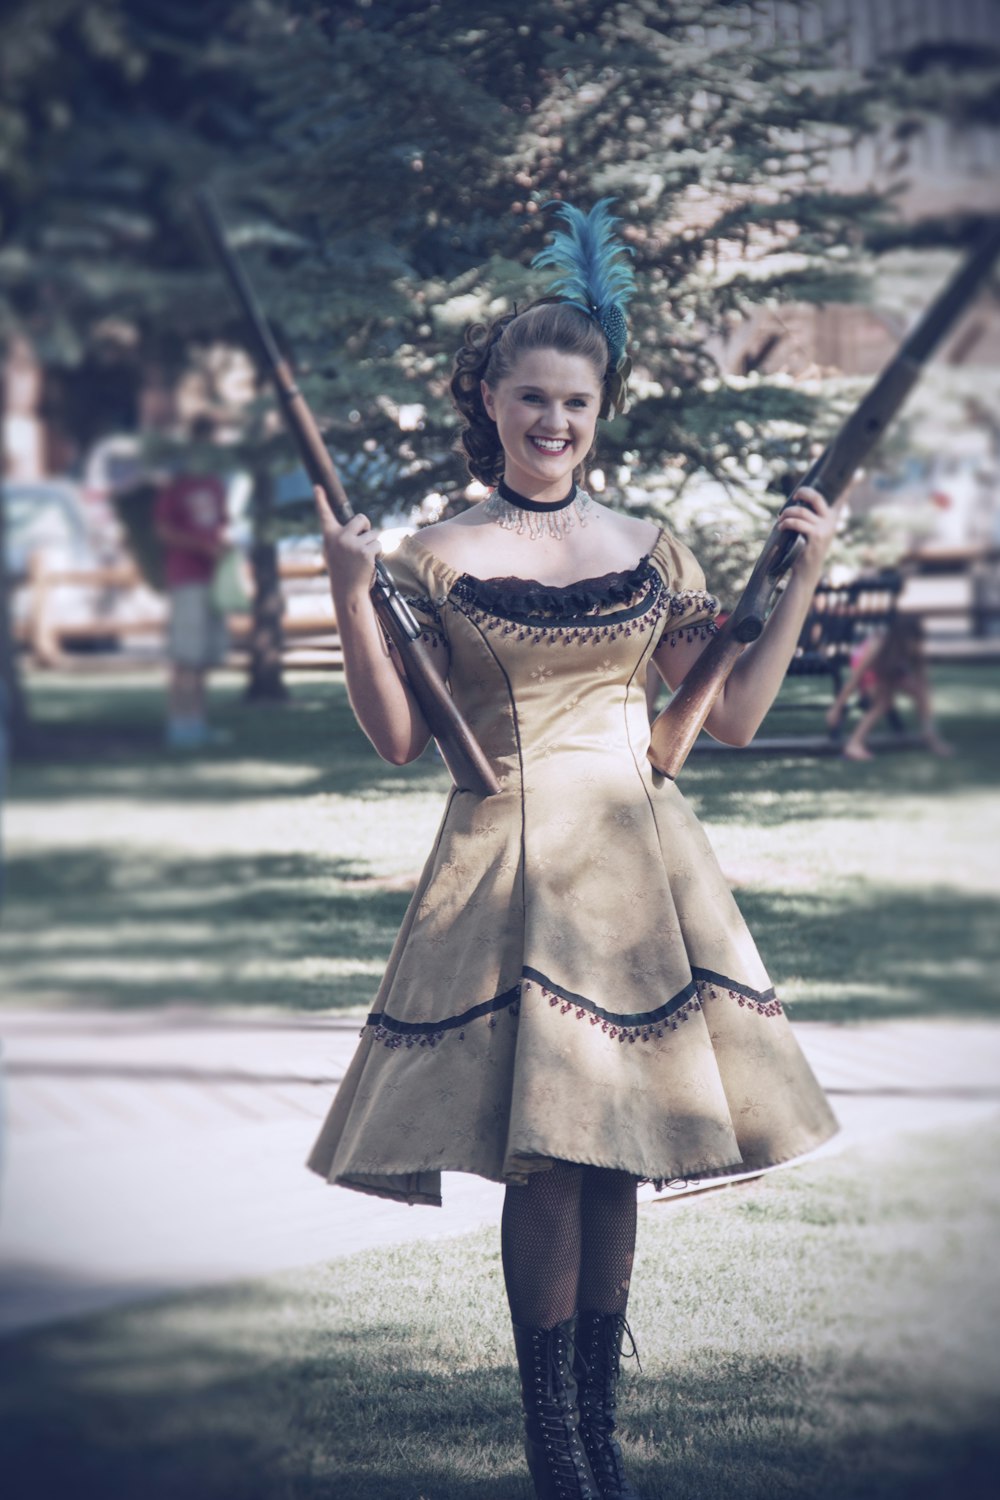 a woman in a dress holding a baseball bat